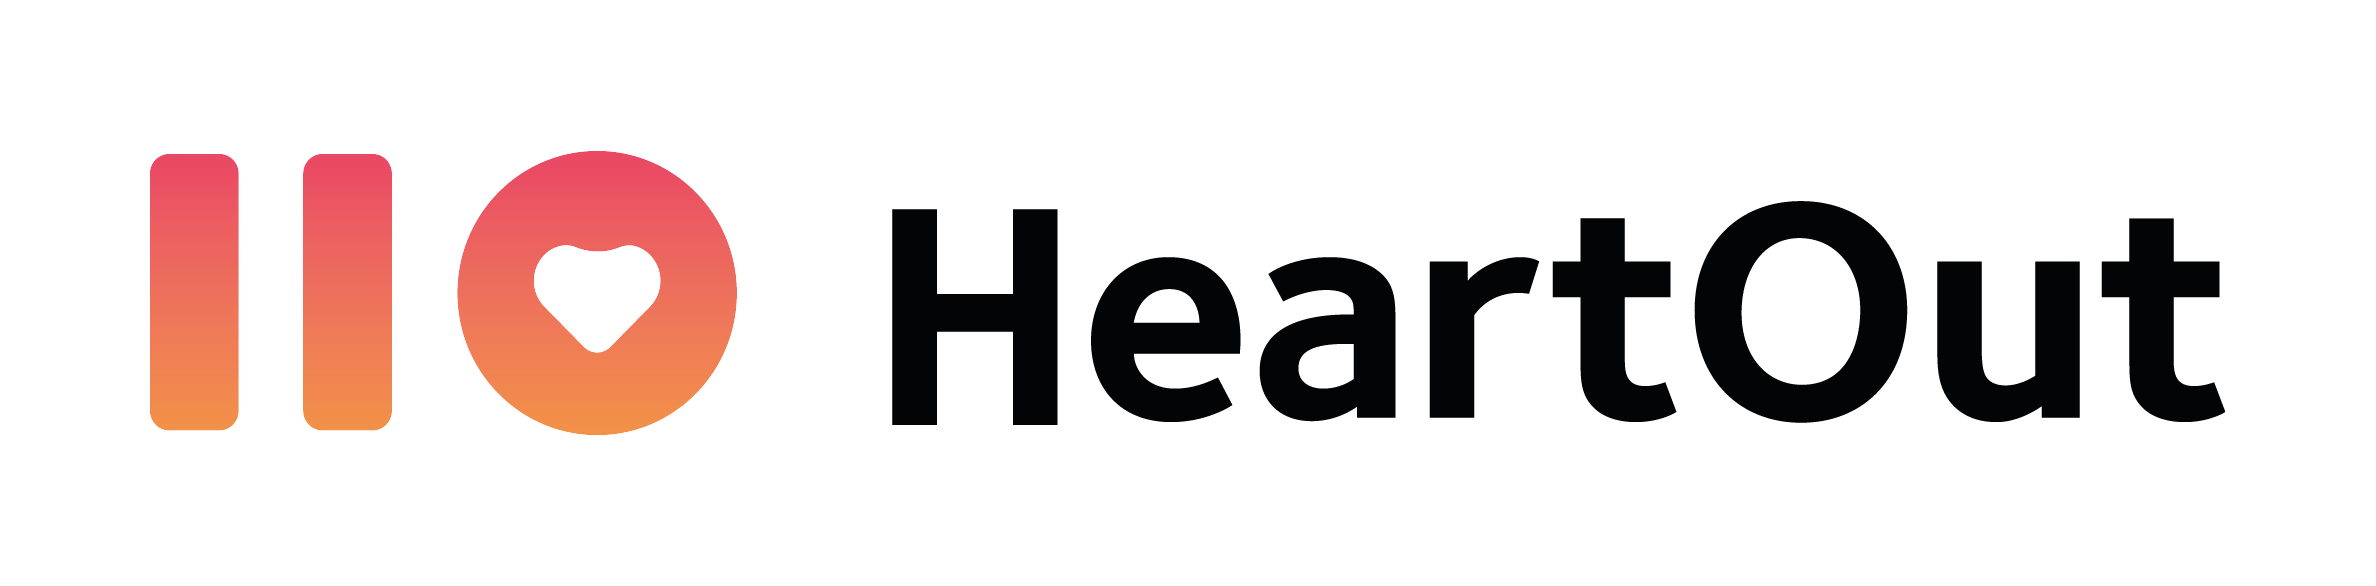 HeartOut-Logo.png